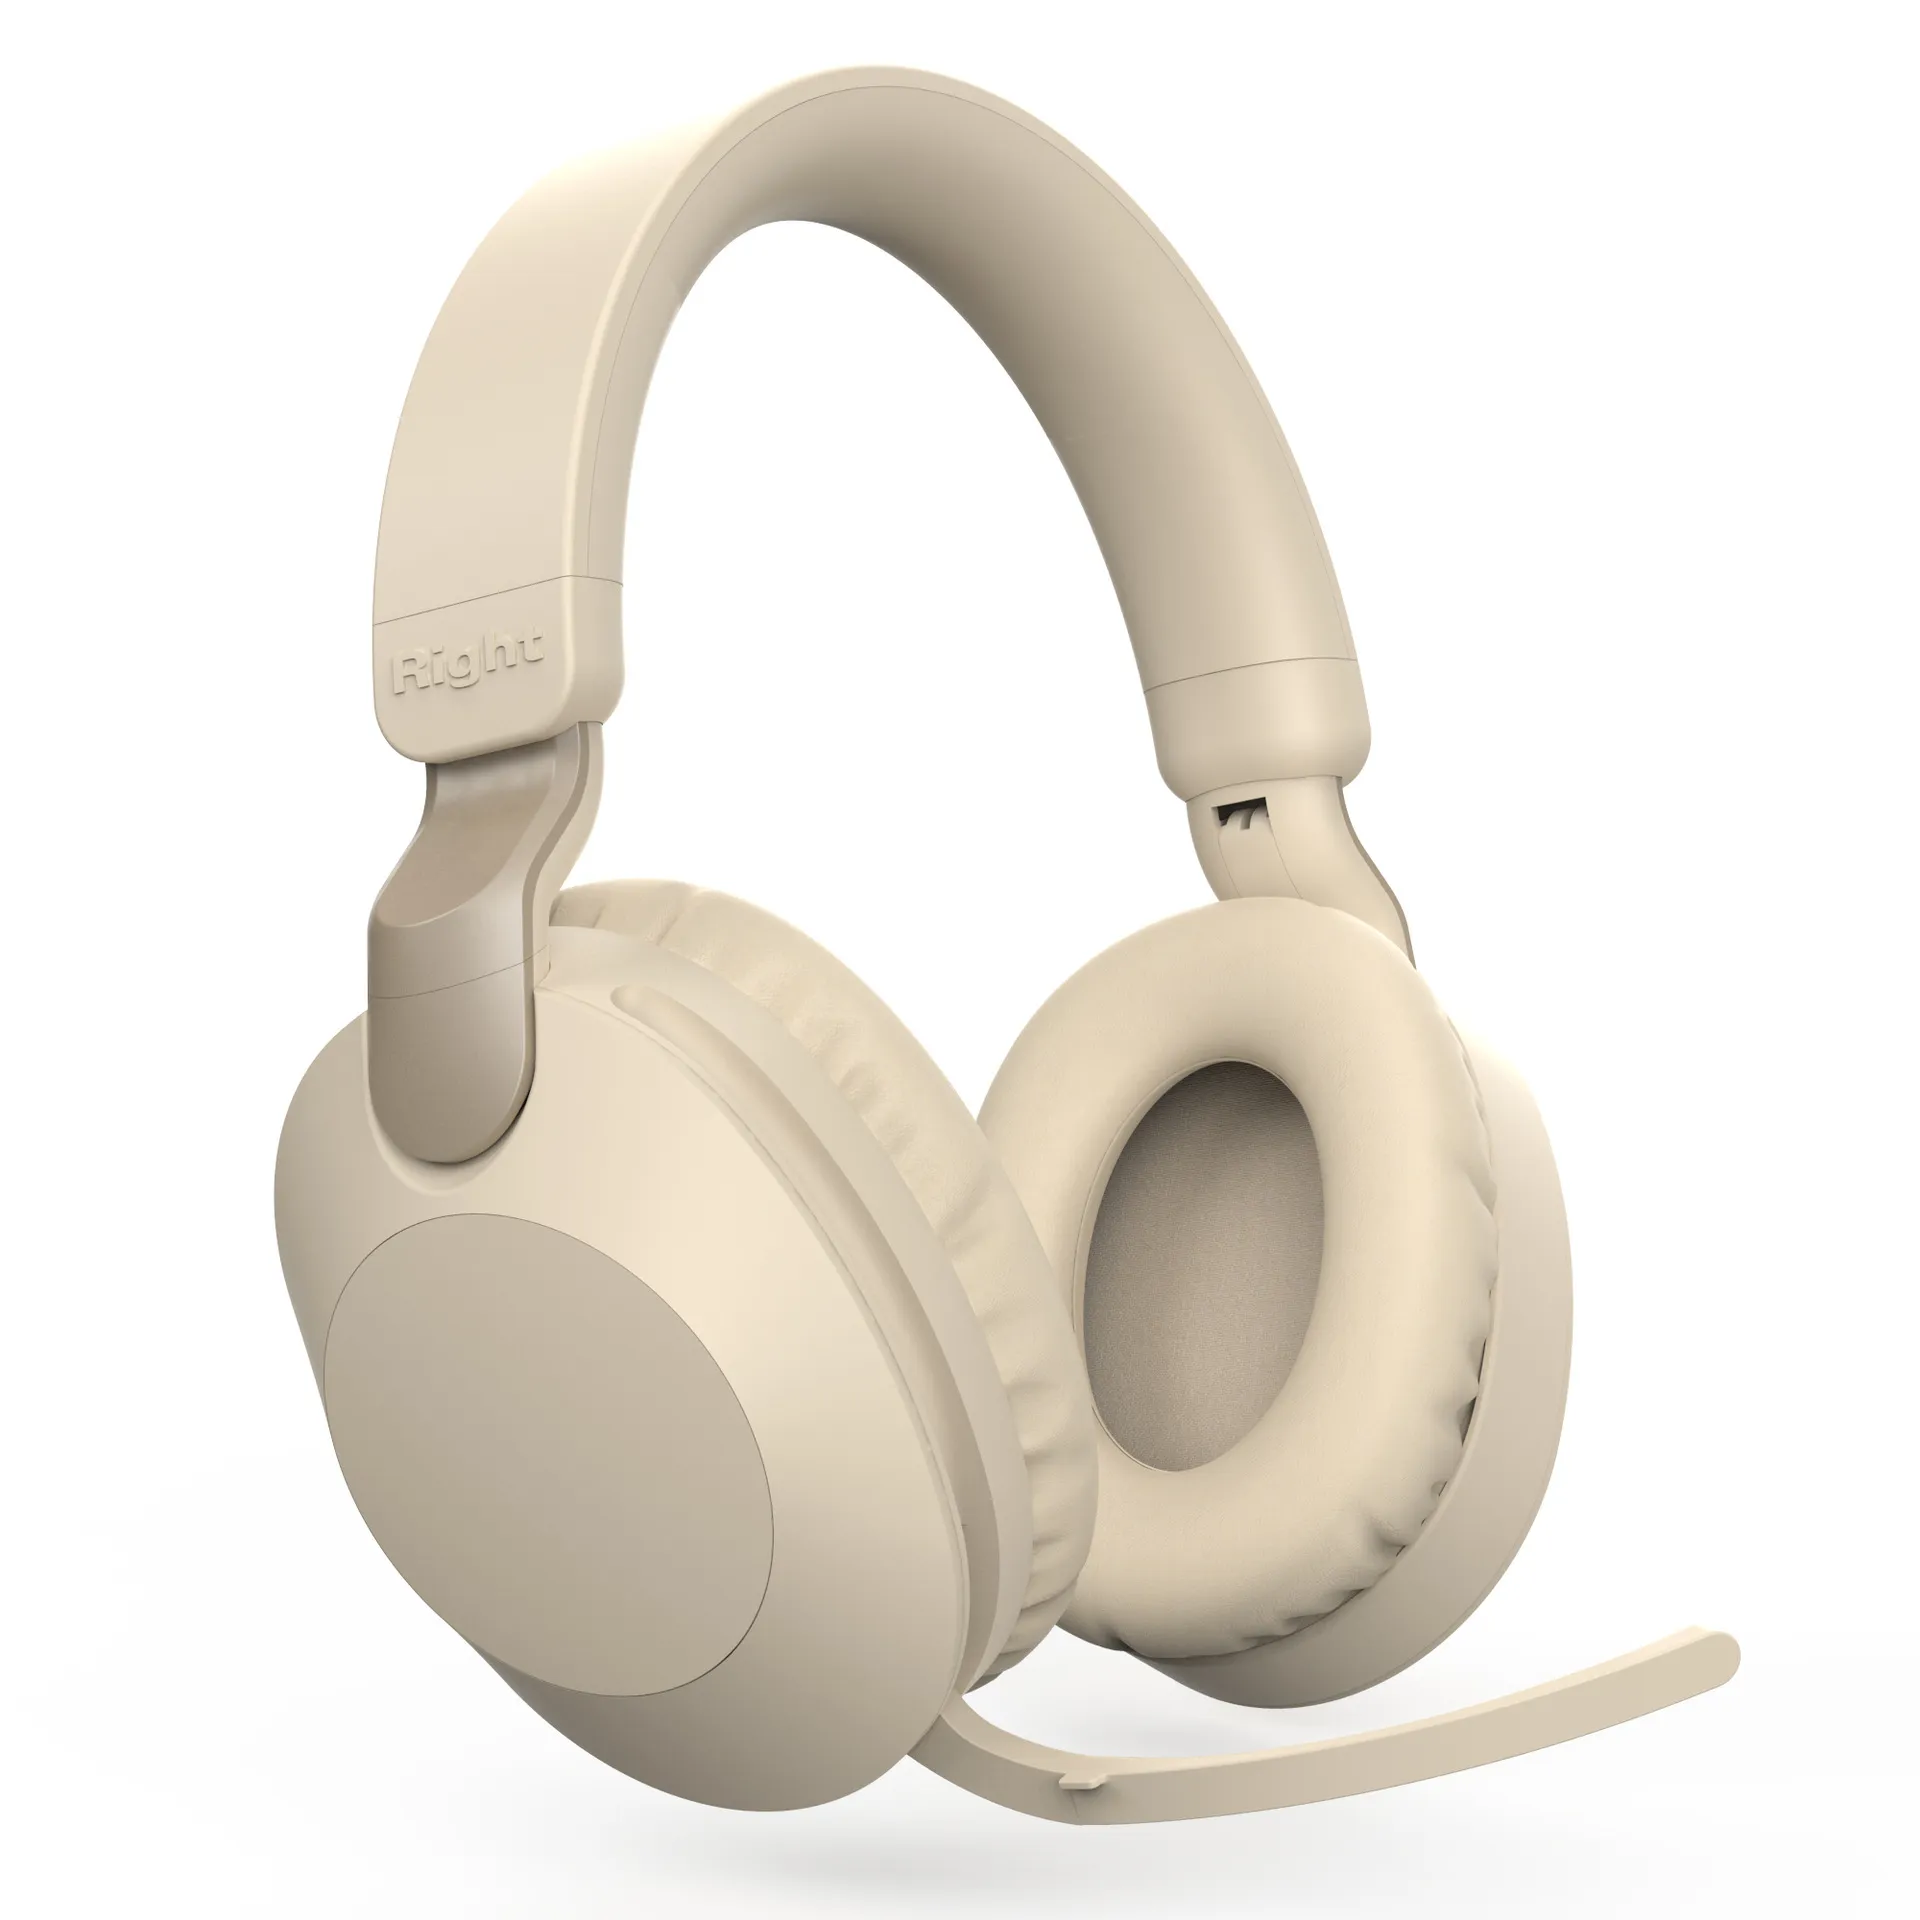 B2 new private model header -dressed Bluetooth headset wireless Bluetooth headset noise reduction heavy bass game headphones talk headset